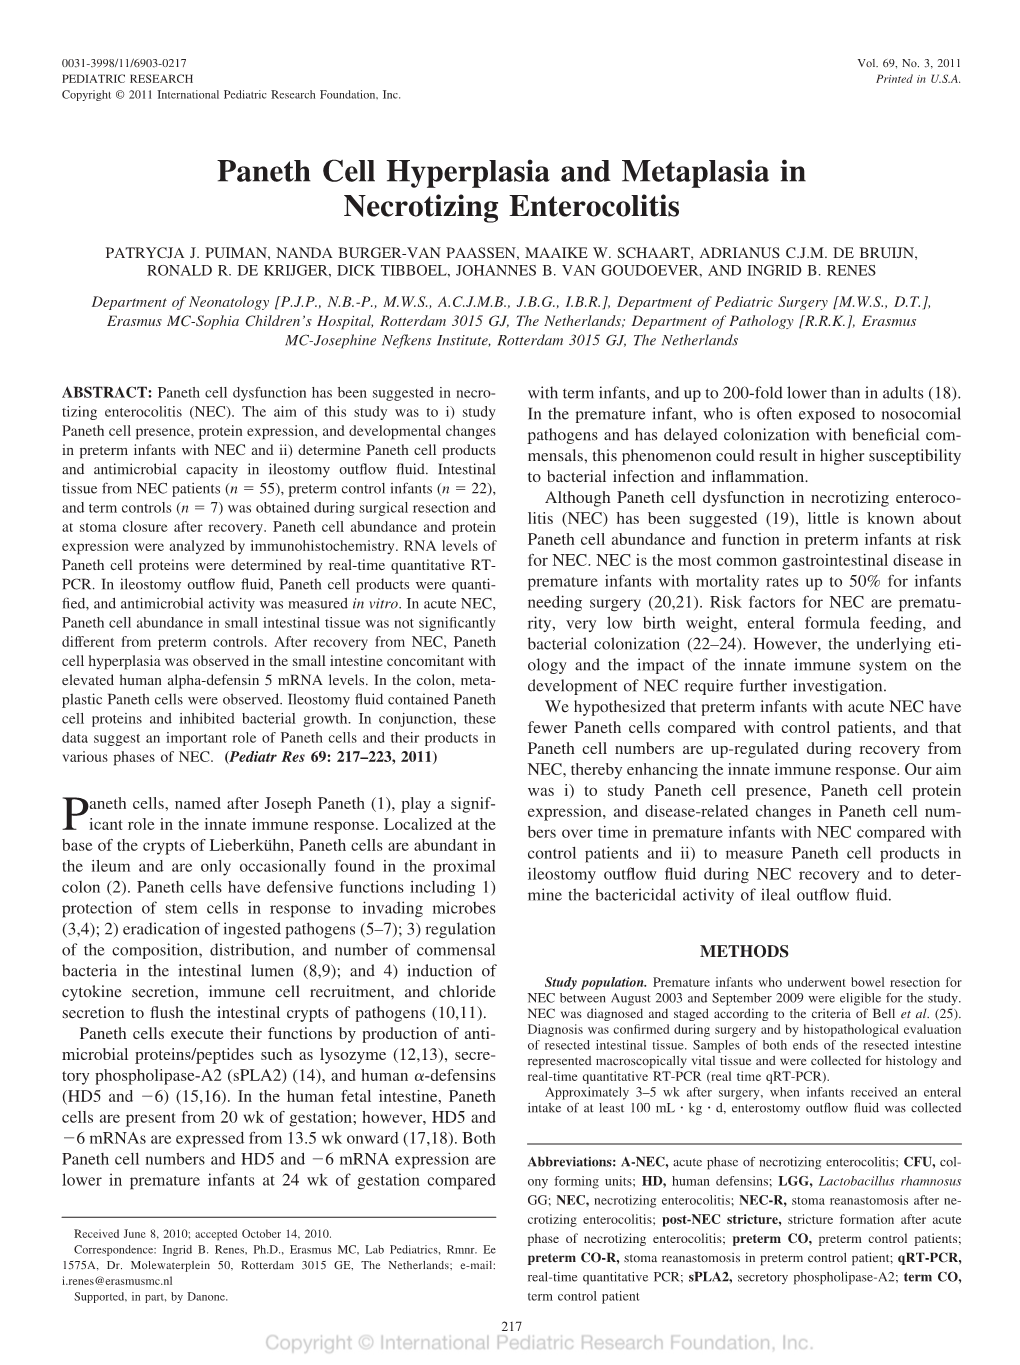 Paneth Cell Hyperplasia and Metaplasia in Necrotizing Enterocolitis